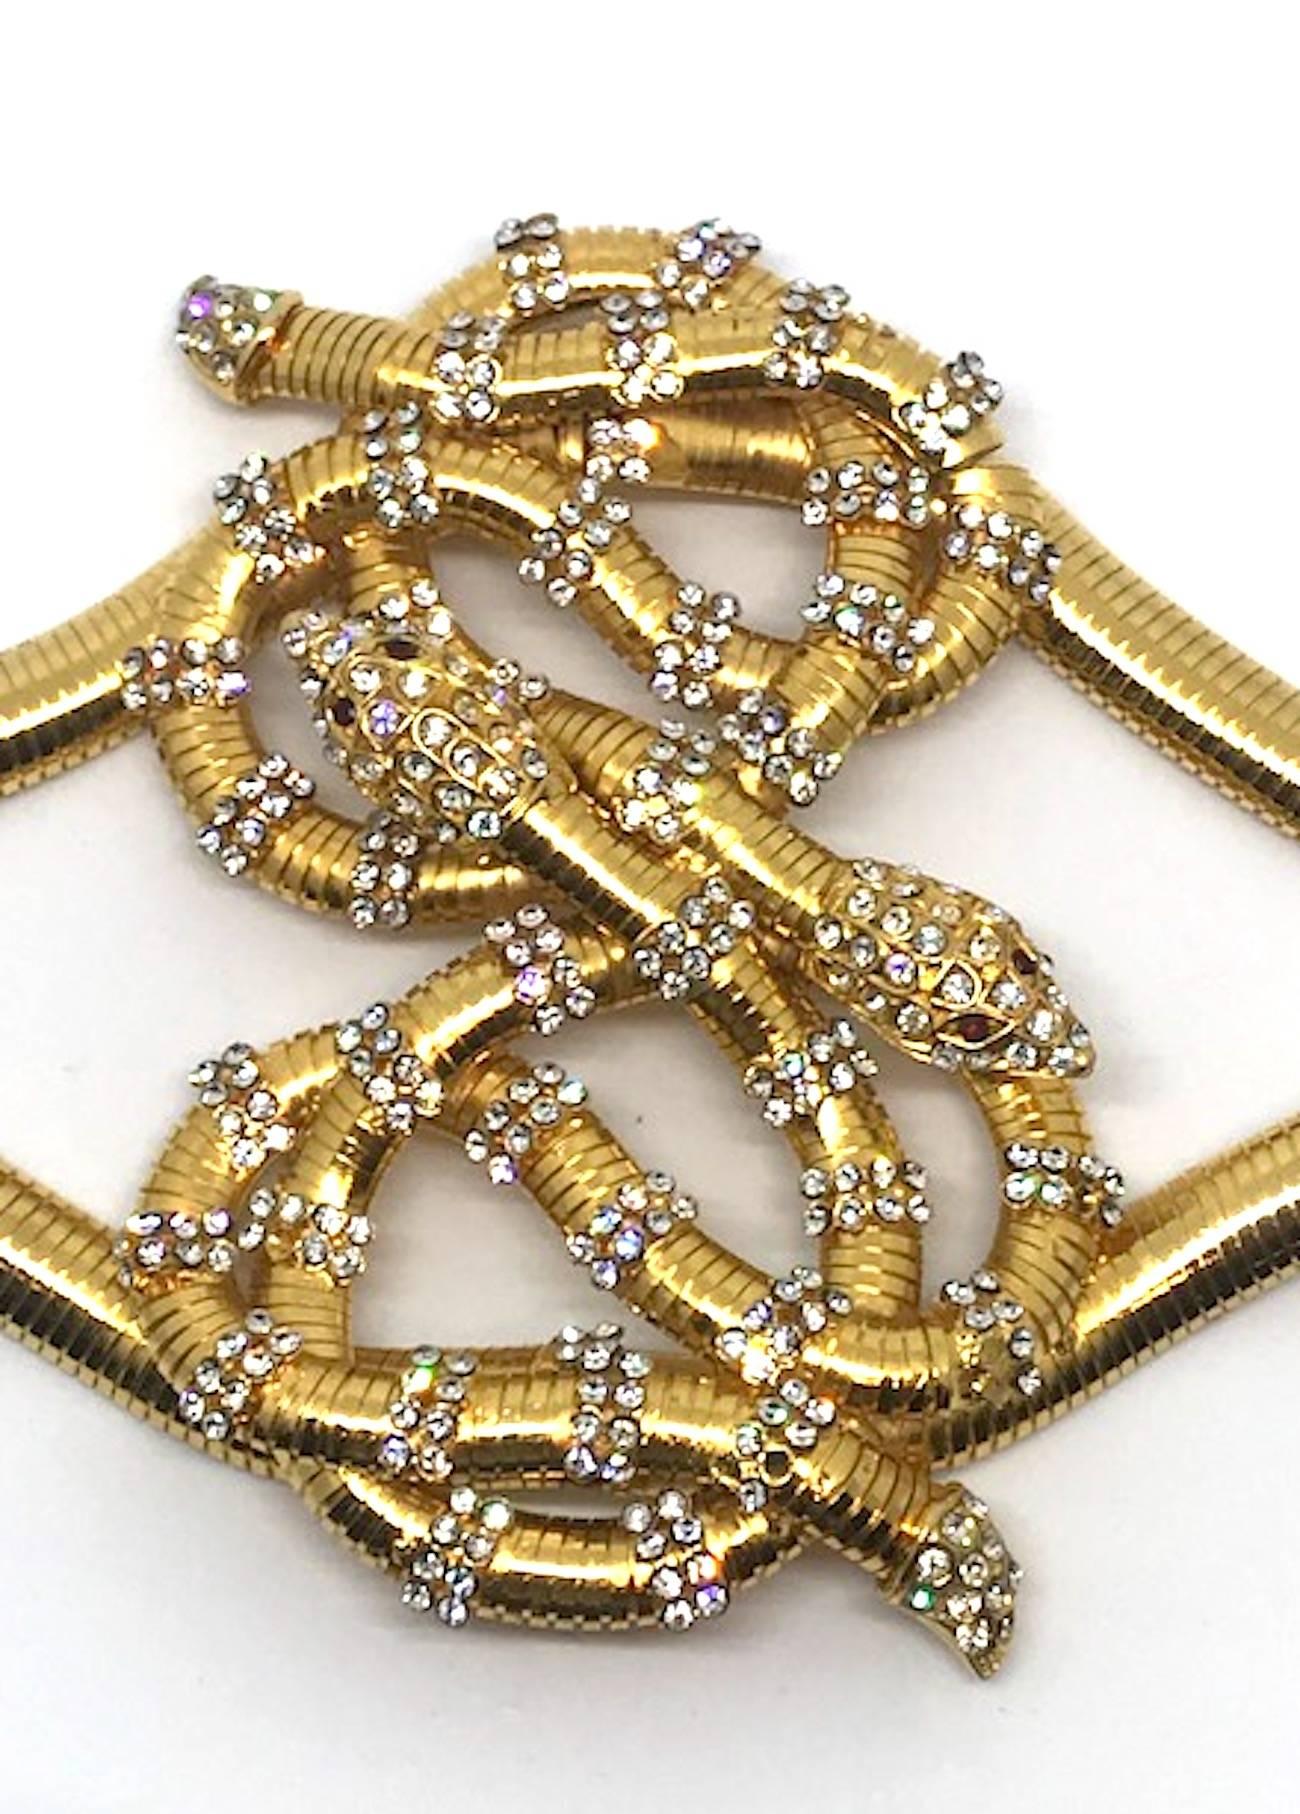 Art Deco De Liguoro serpent bracelet from Actress Elsa Martinelli's personal collection